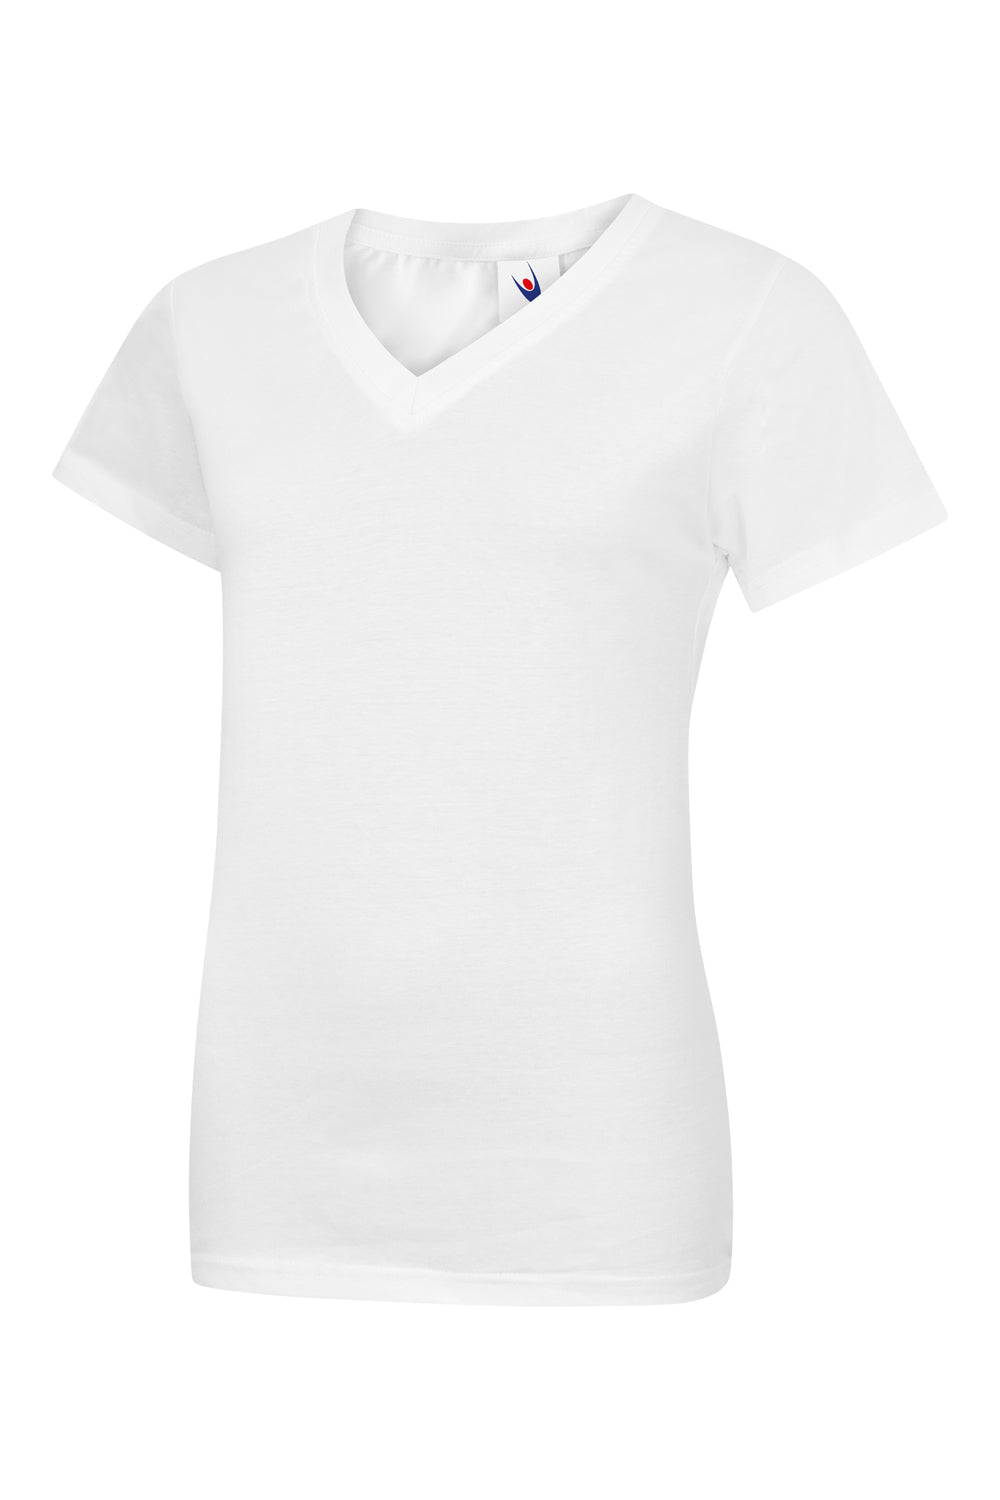 Uneek Ladies Classic V Neck T Shirt UC319 - White